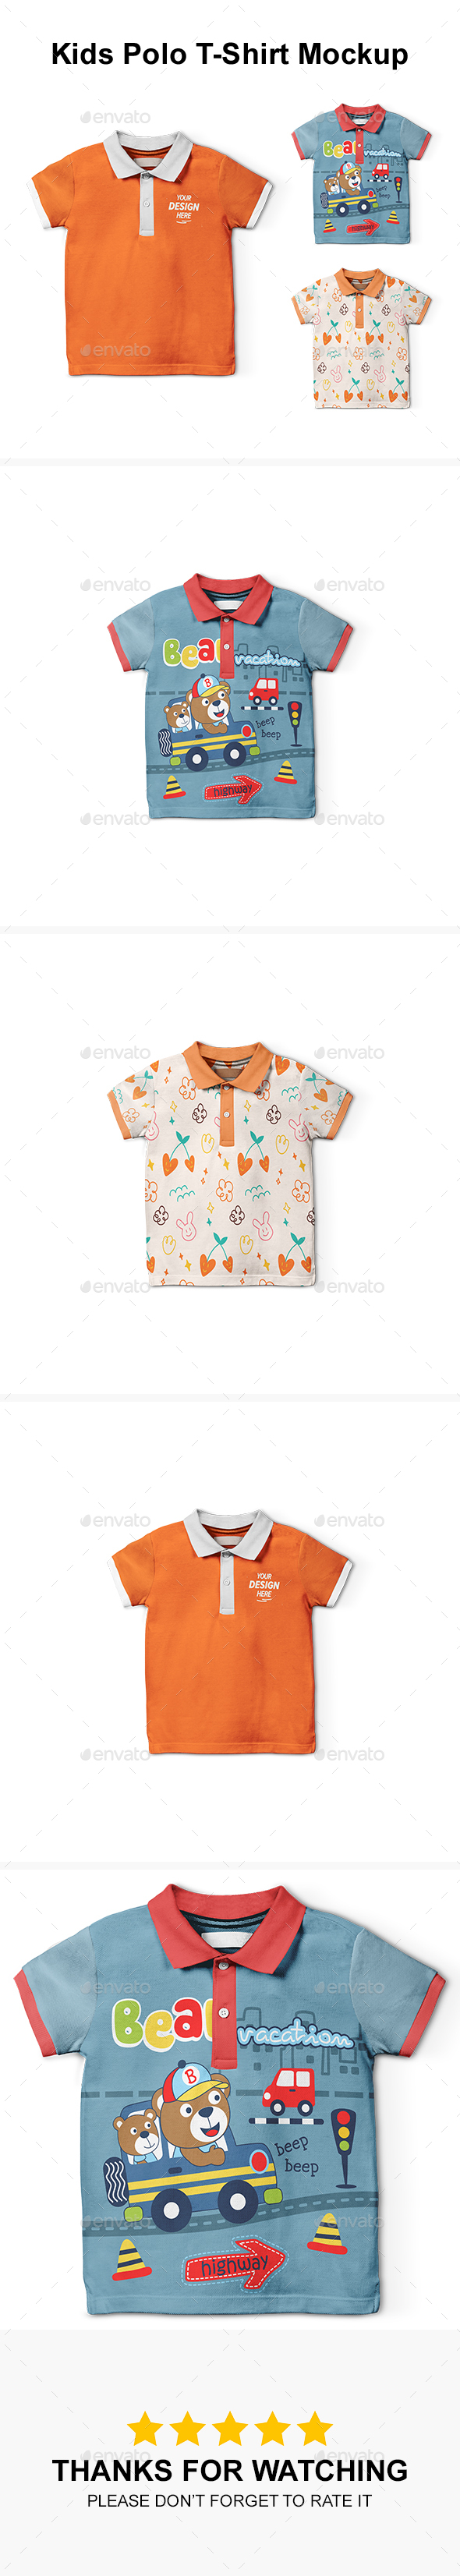 [DOWNLOAD]Kids Polo T-Shirt Mockup